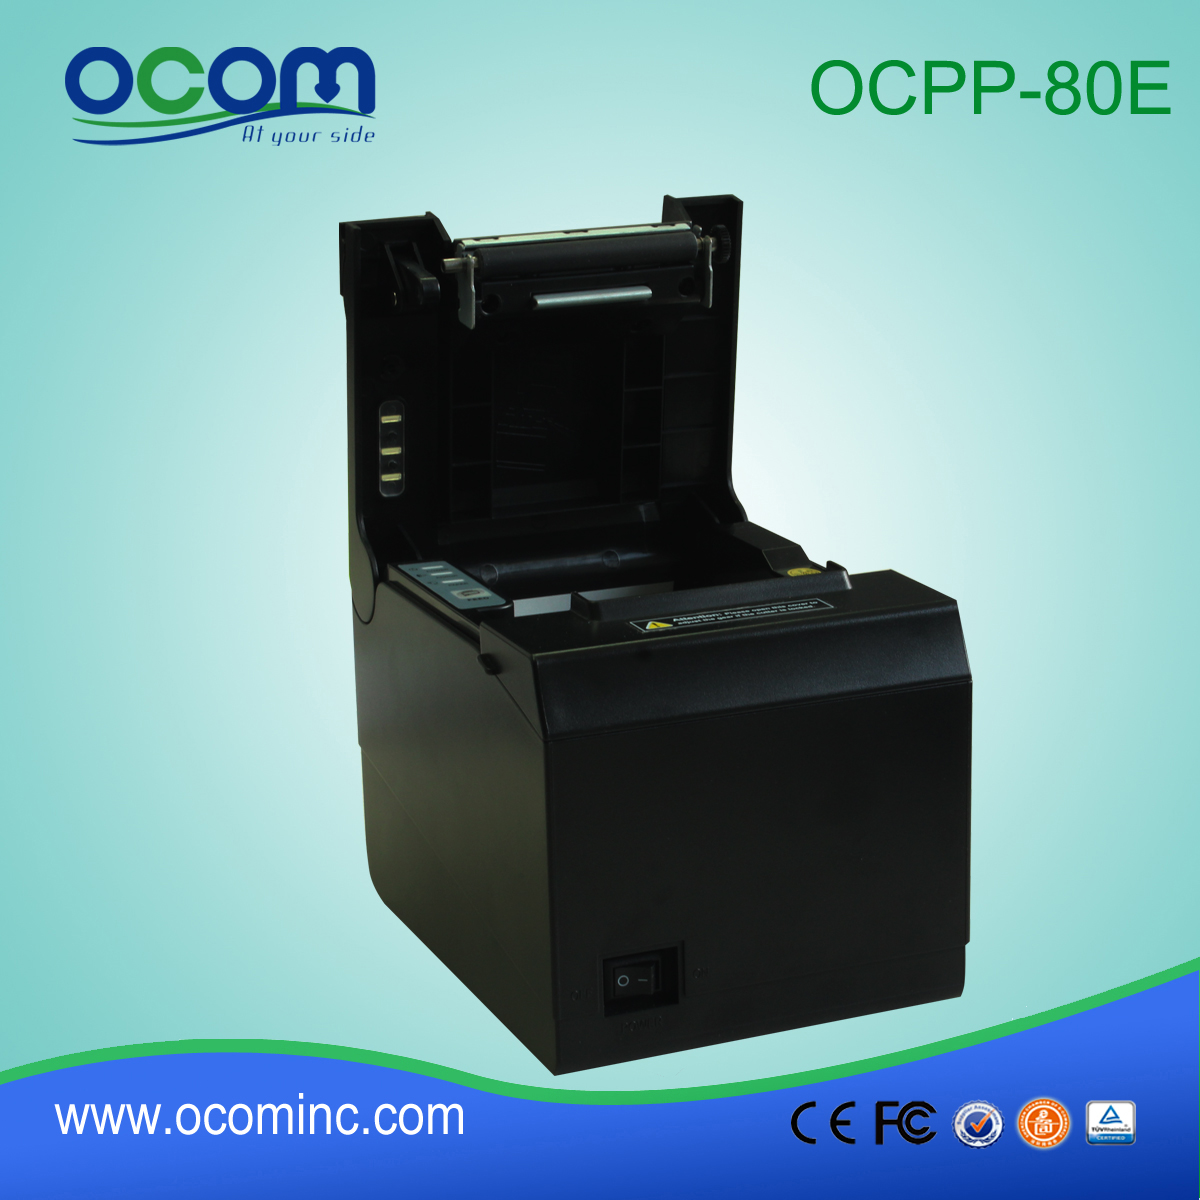 OCPP-80E USB / parallel autosnijder 80mm goedkope ontvangst printer pos thermische